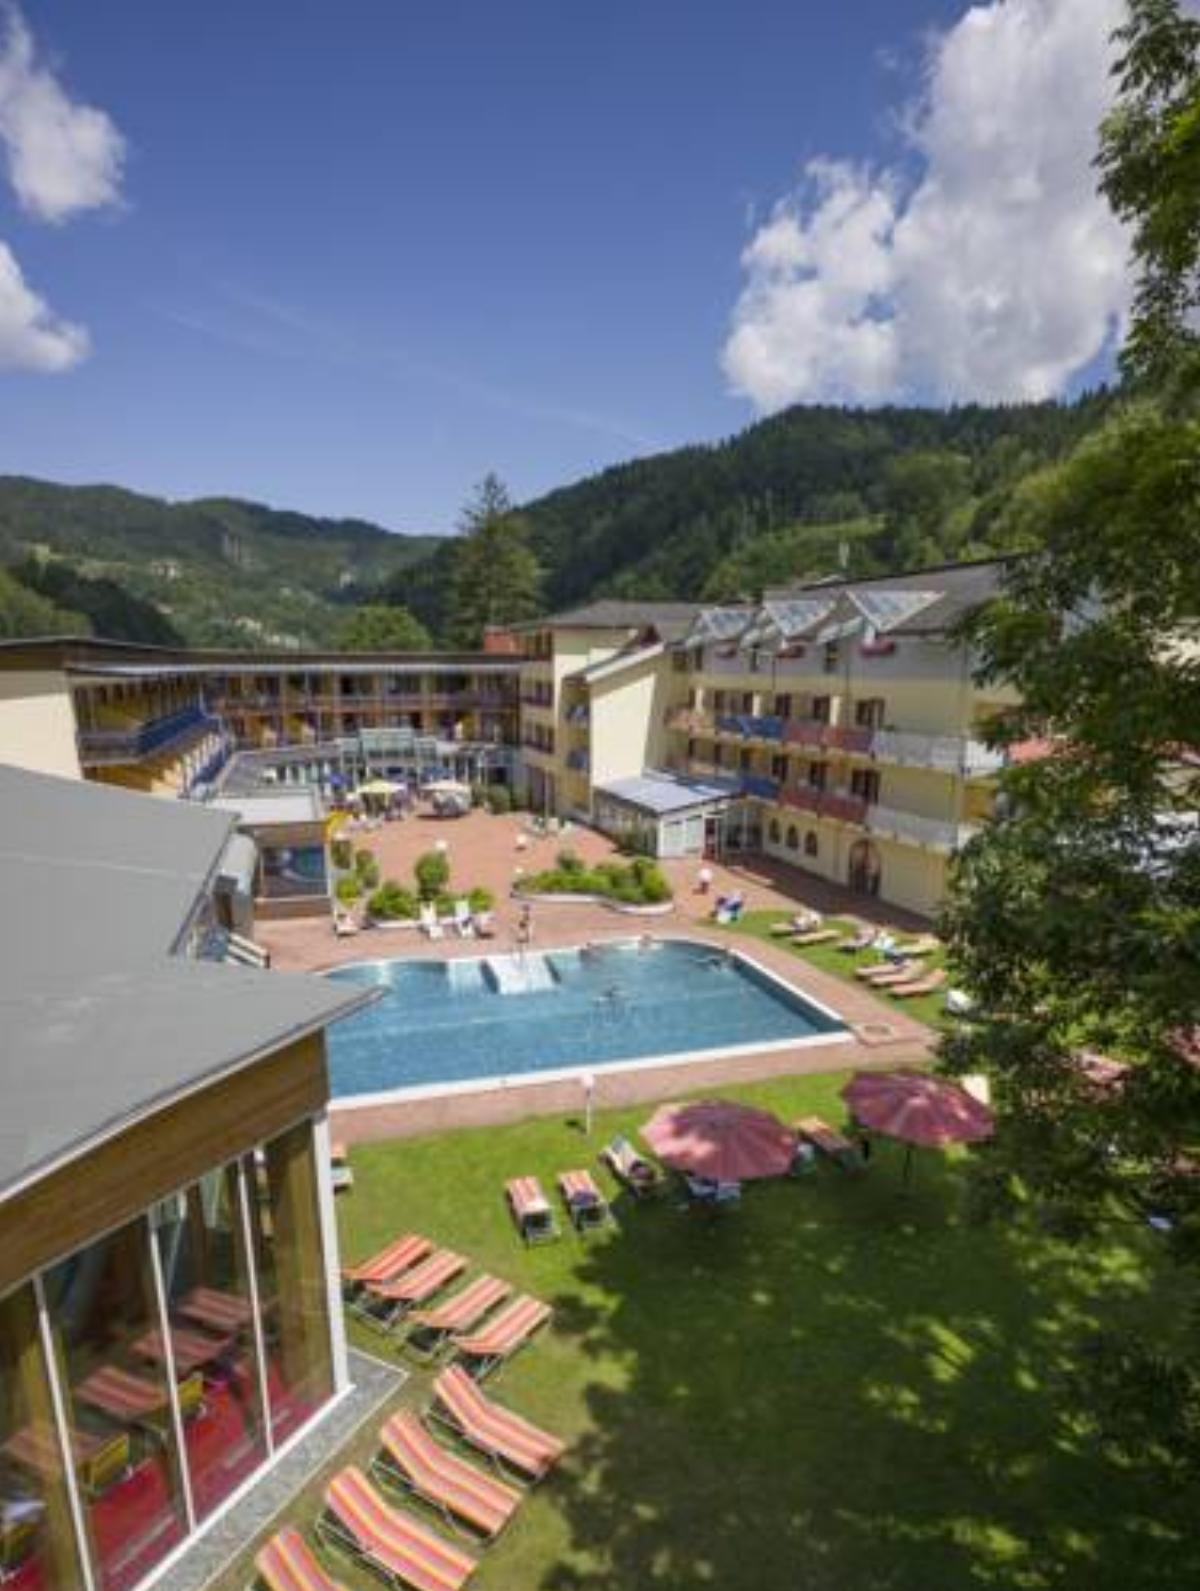 Vivea Gesundheitshotel Eisenkappel Hotel Bad Eisenkappel Austria